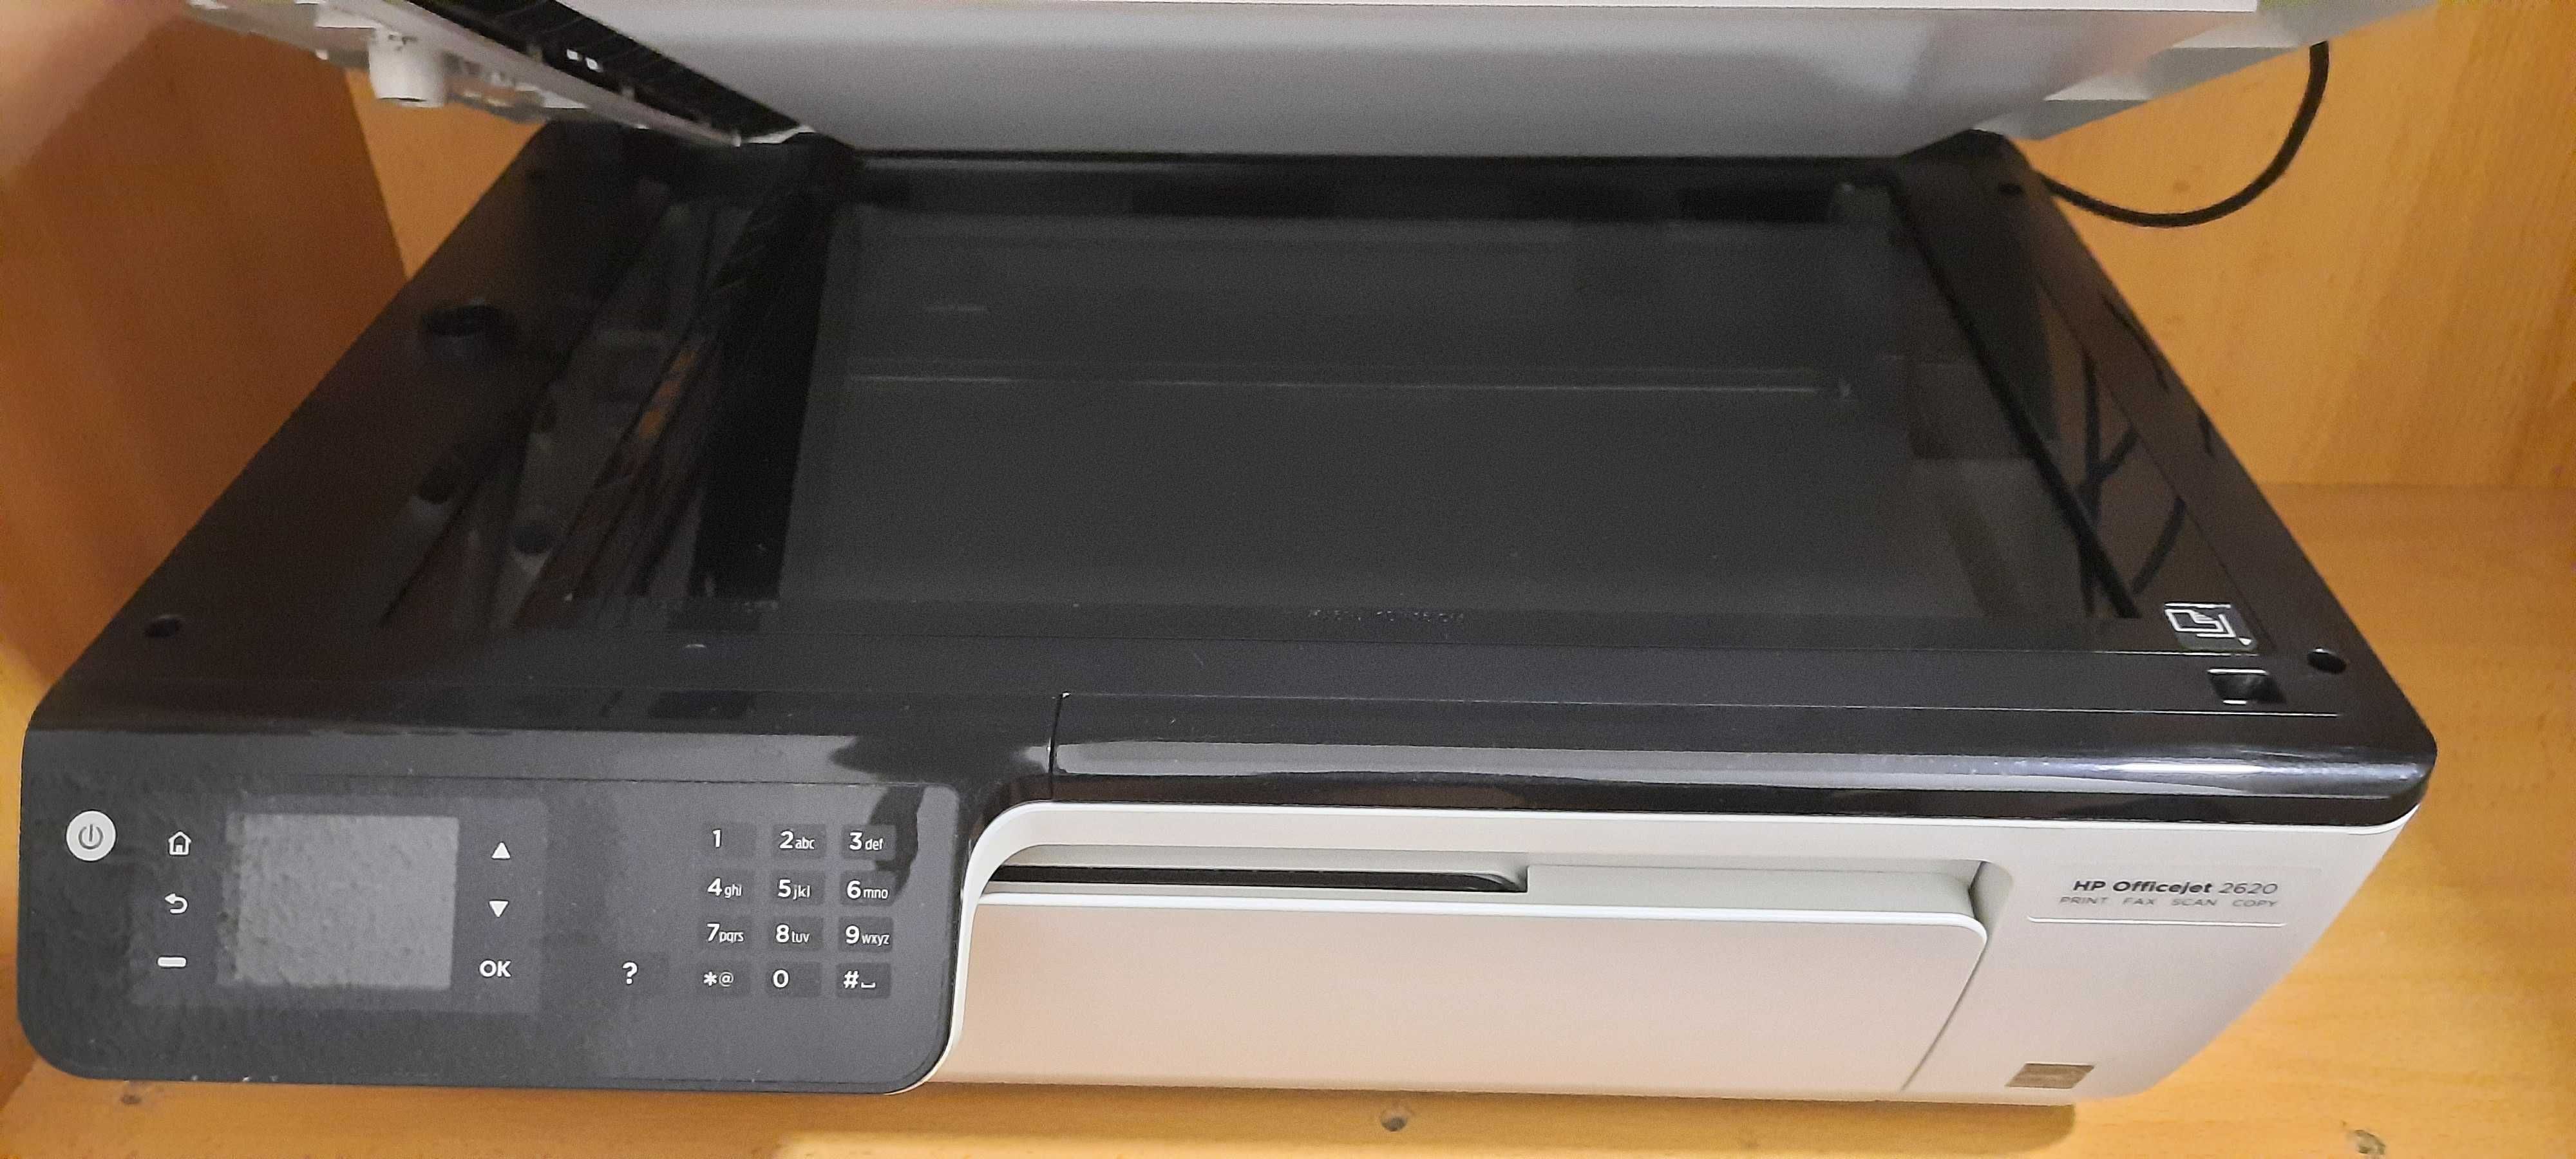 Impressora HP Officejet 2620